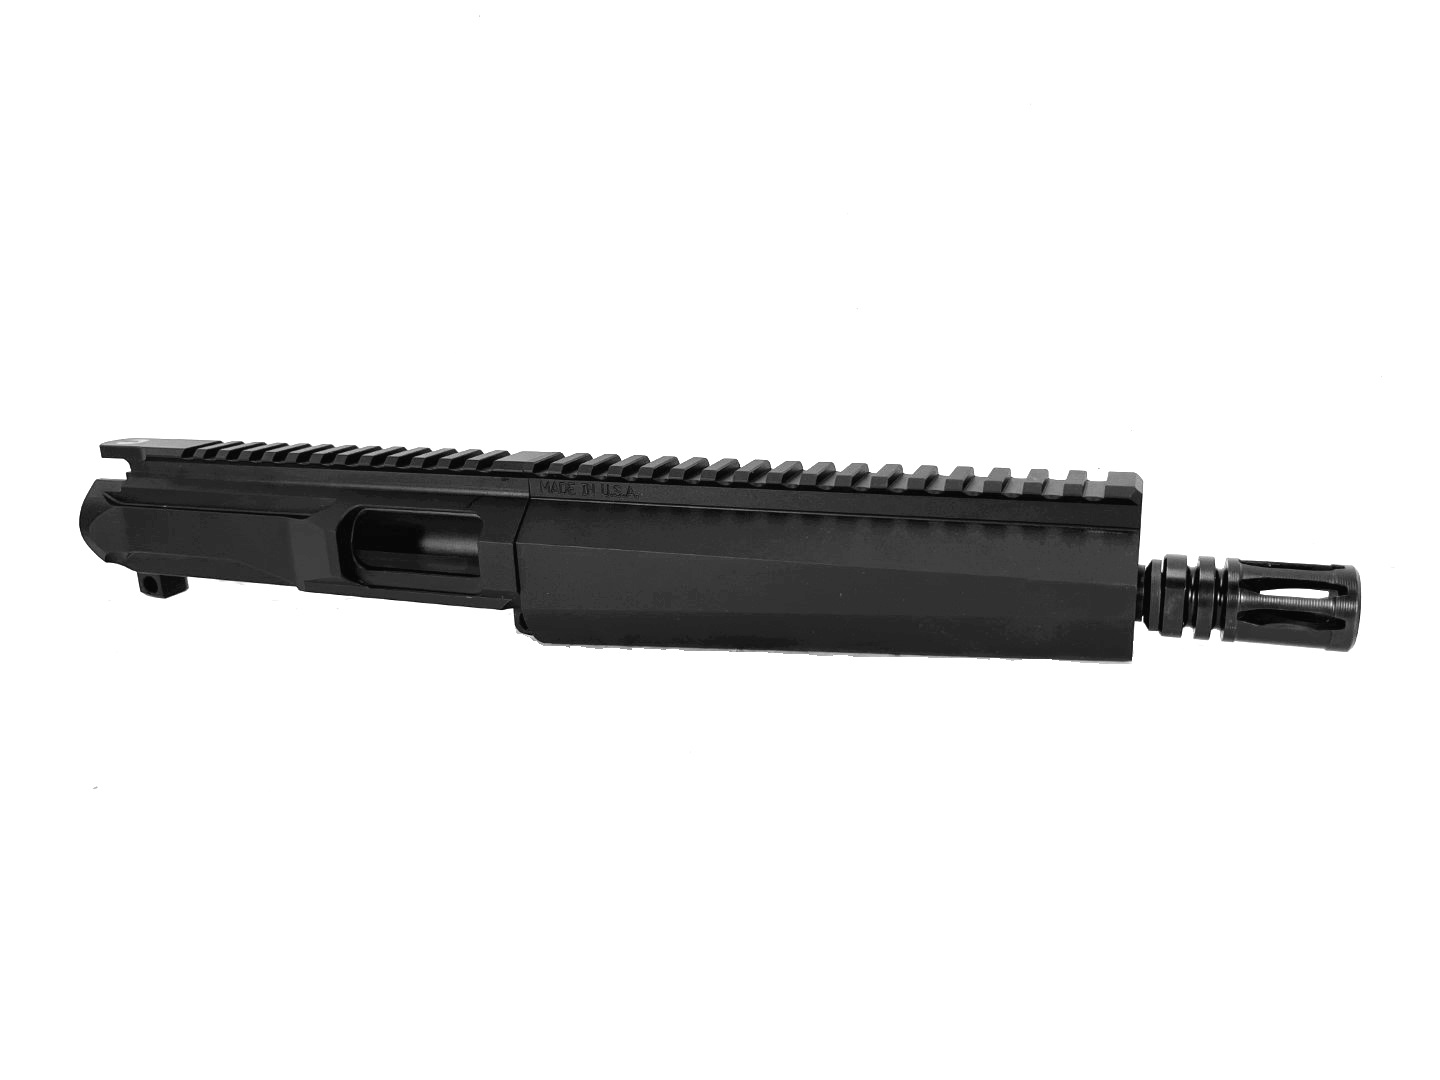 8 inch AR-15 / AR-9 MP5 STYLE 9mm Pistol Caliber Nitride Upper